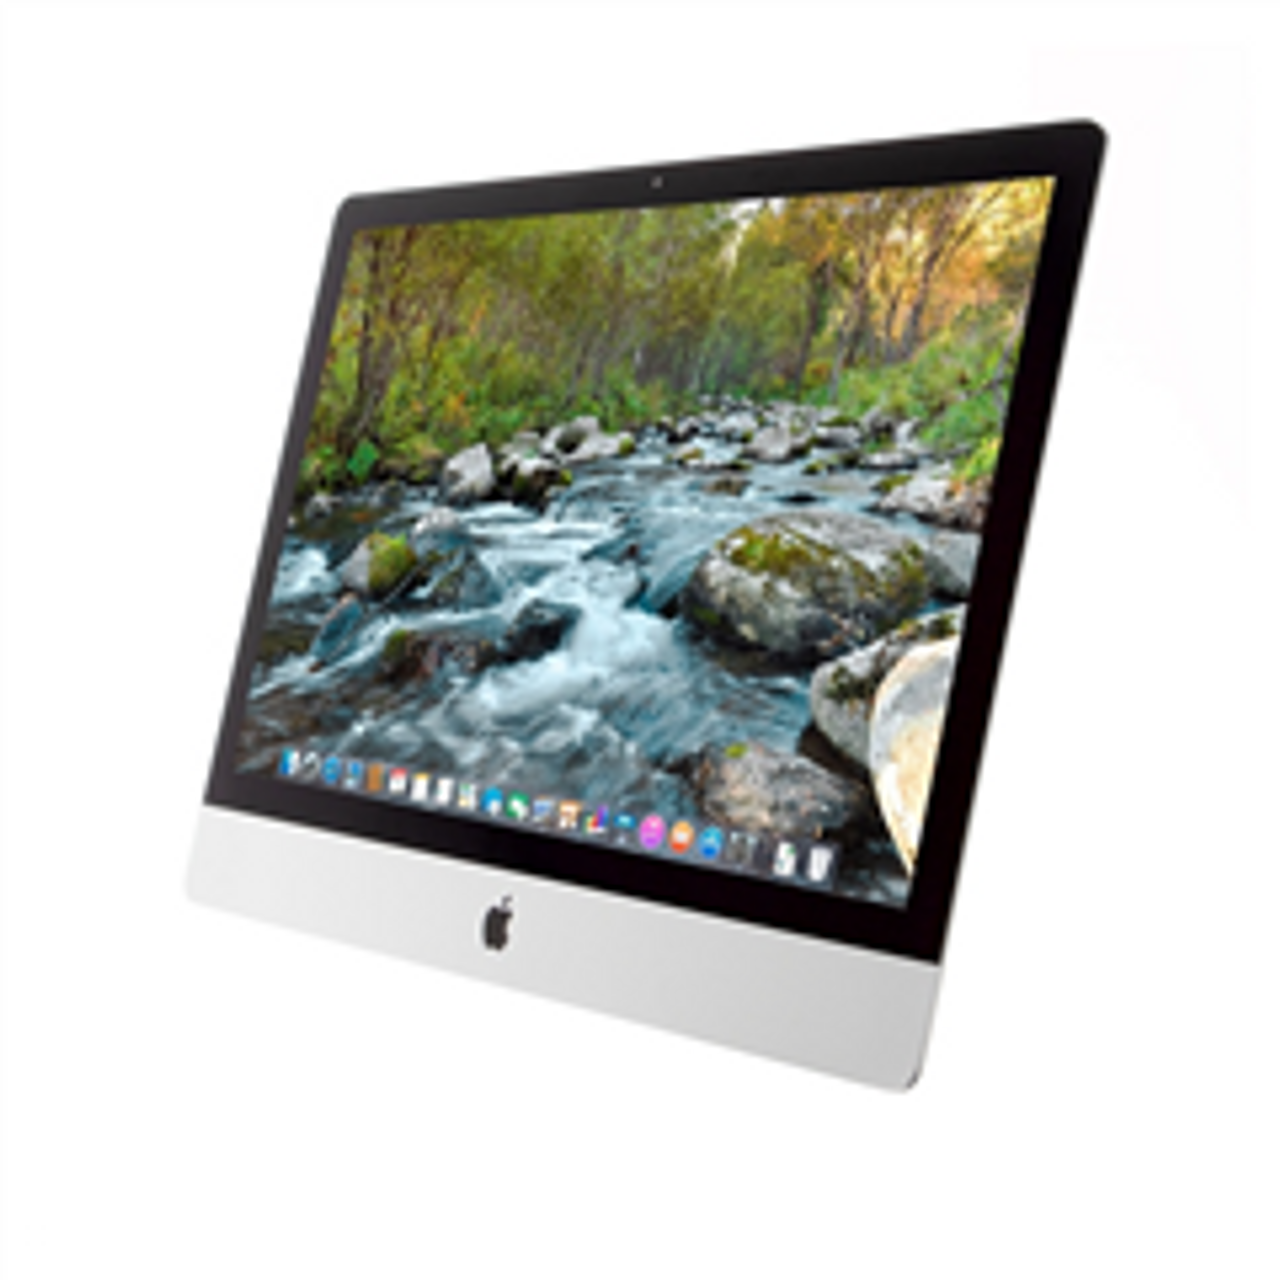 VESA Mount Installed*: Apple iMac Retina 5K 27-inch 3.4GHz Quad-Core i5  (Mid 2017) MNE92LL/A 3 - Excellent Condition